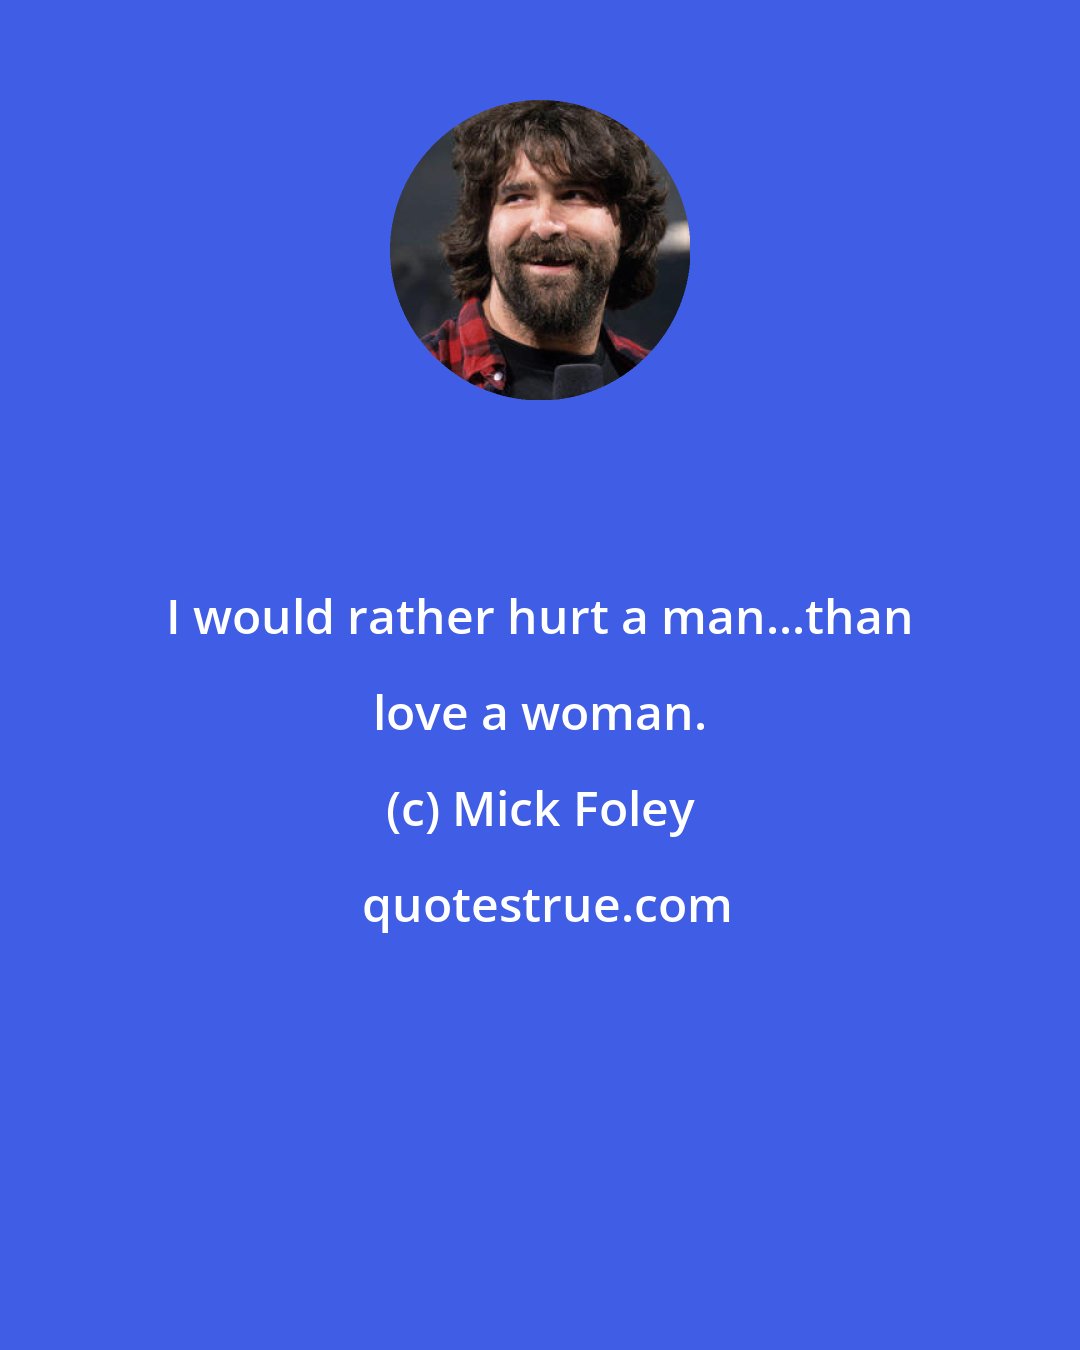 Mick Foley: I would rather hurt a man...than love a woman.